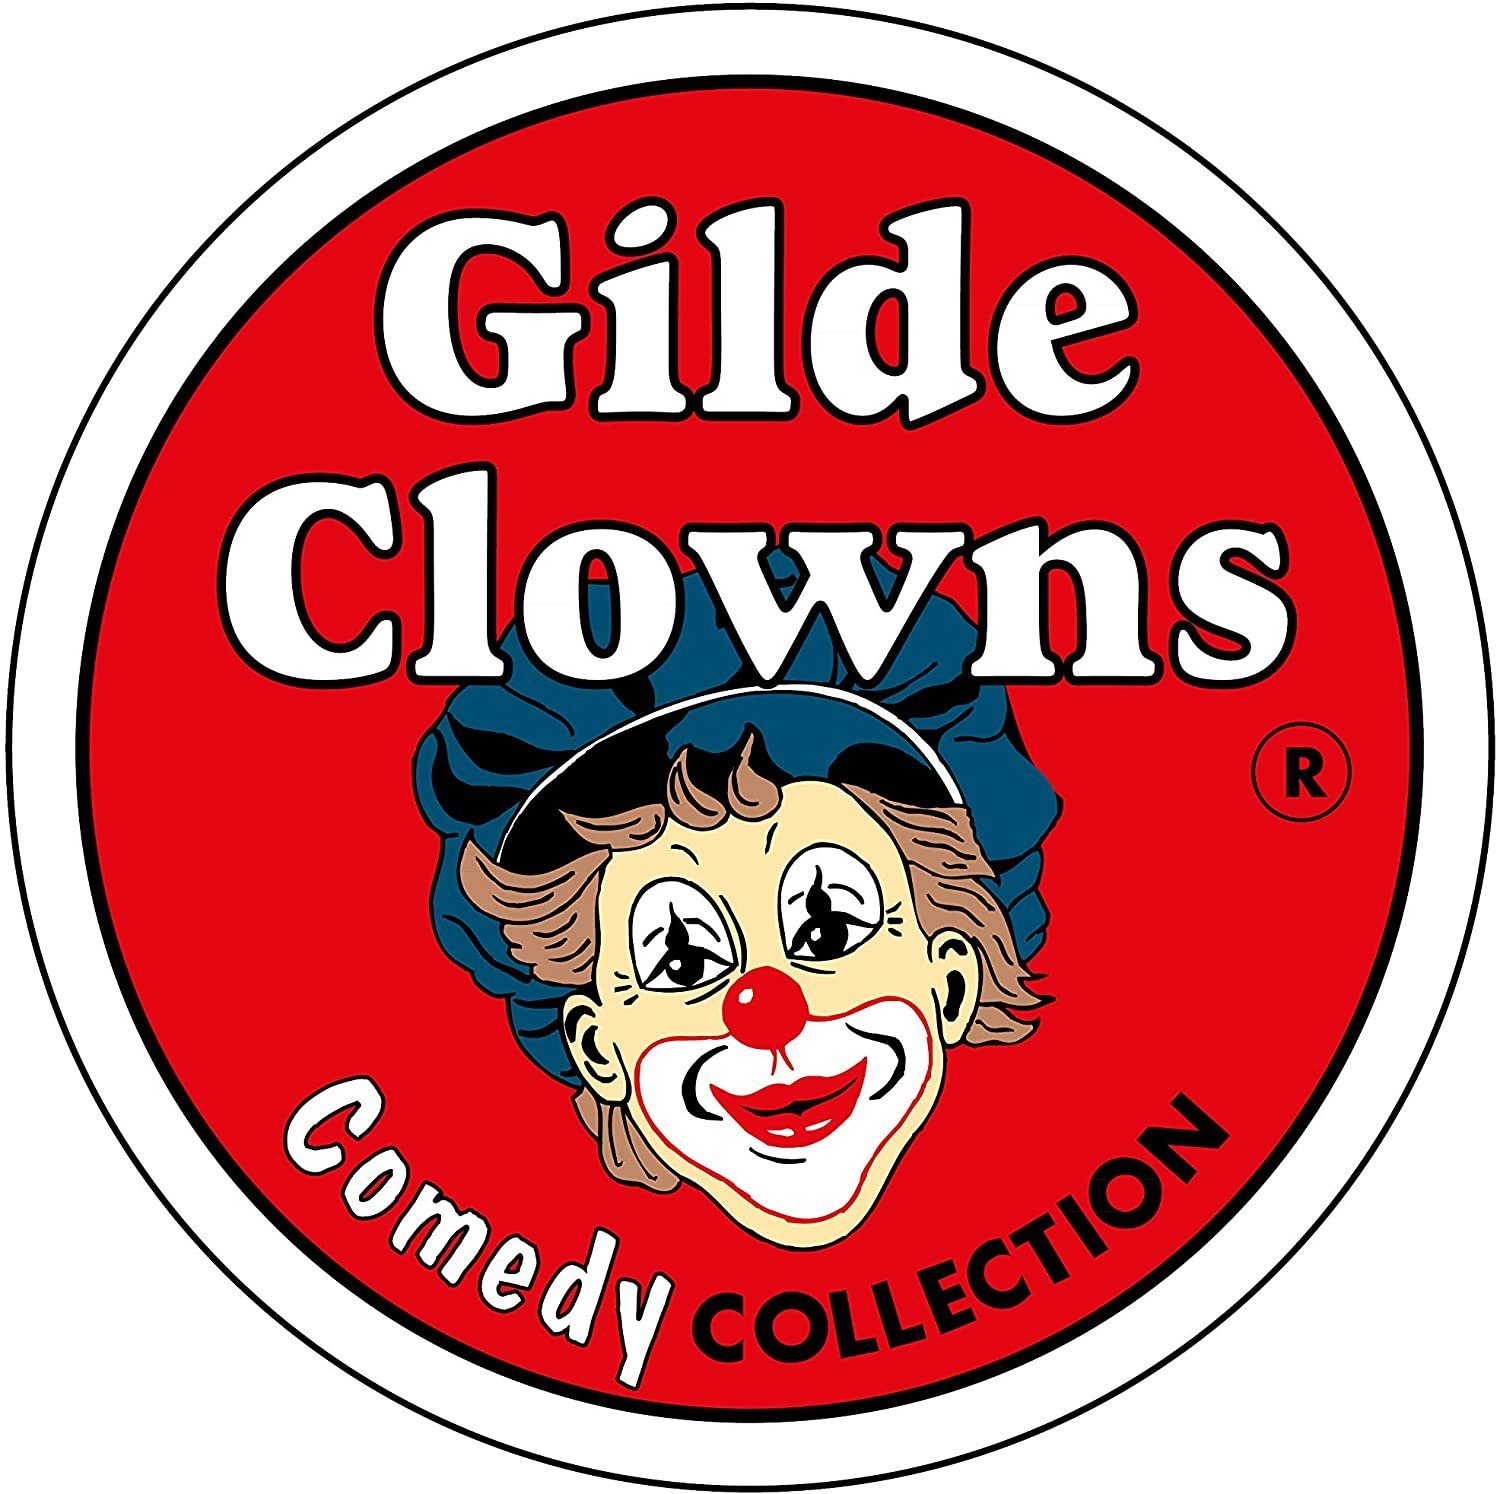 Indoor Sammelfigur Dekofigur Gildeclowns Clown - Grillprofi GILDE -